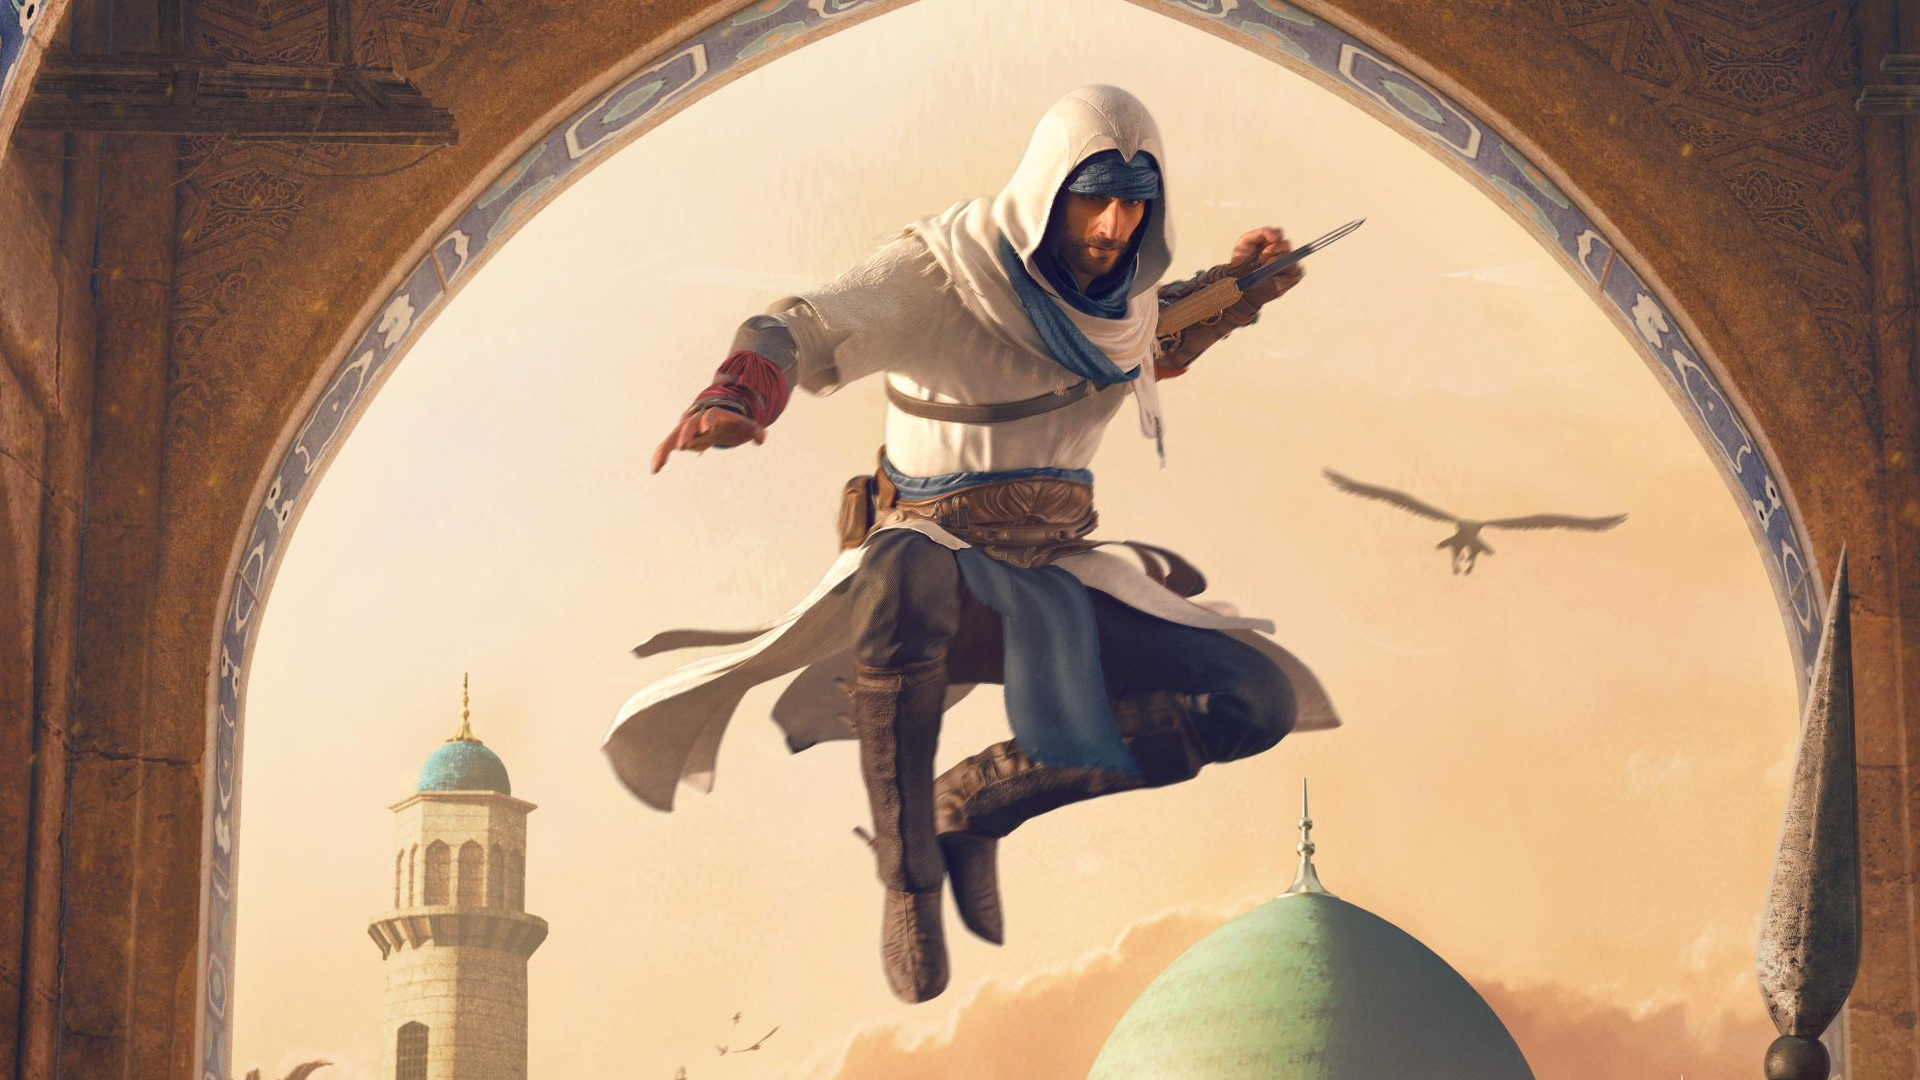 Basim หนุ่มในชุดคลุมสีขาวอันเป็นสัญลักษณ์จาก Assassin's Creed กลางอากาศ